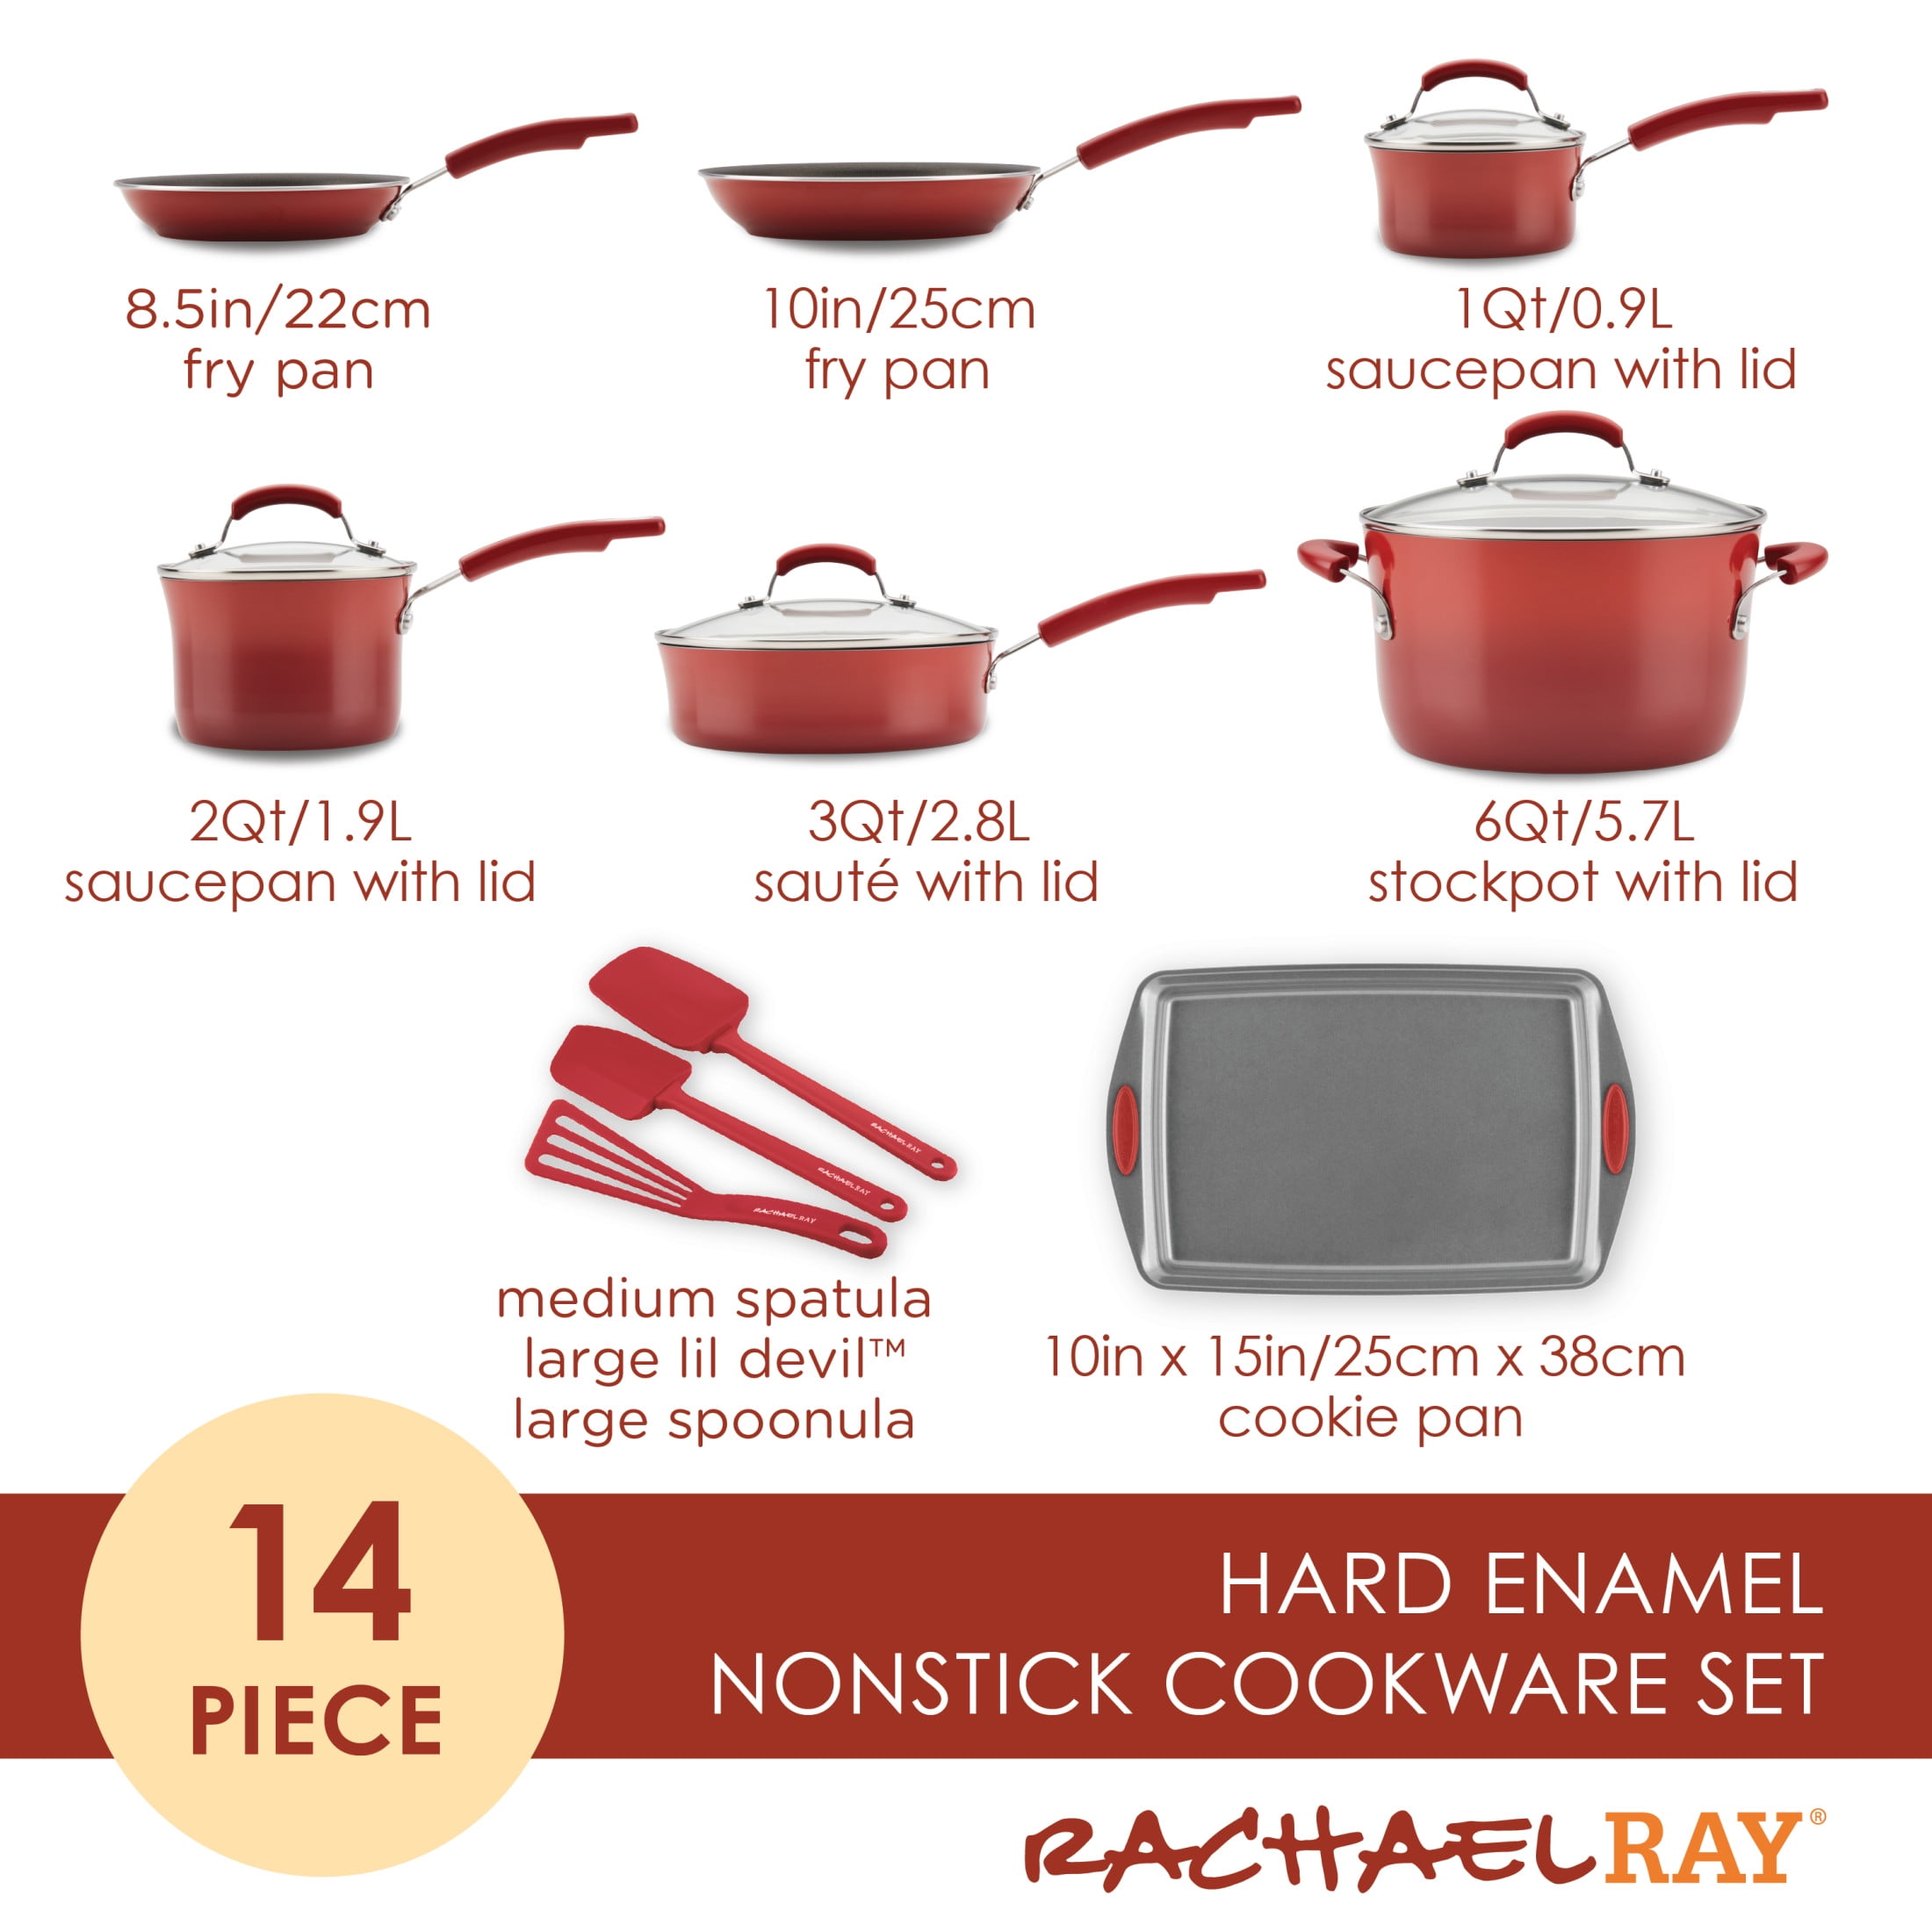 Rachael Ray Hard Enamel Nonstick 14 Piece Cookware Set - The